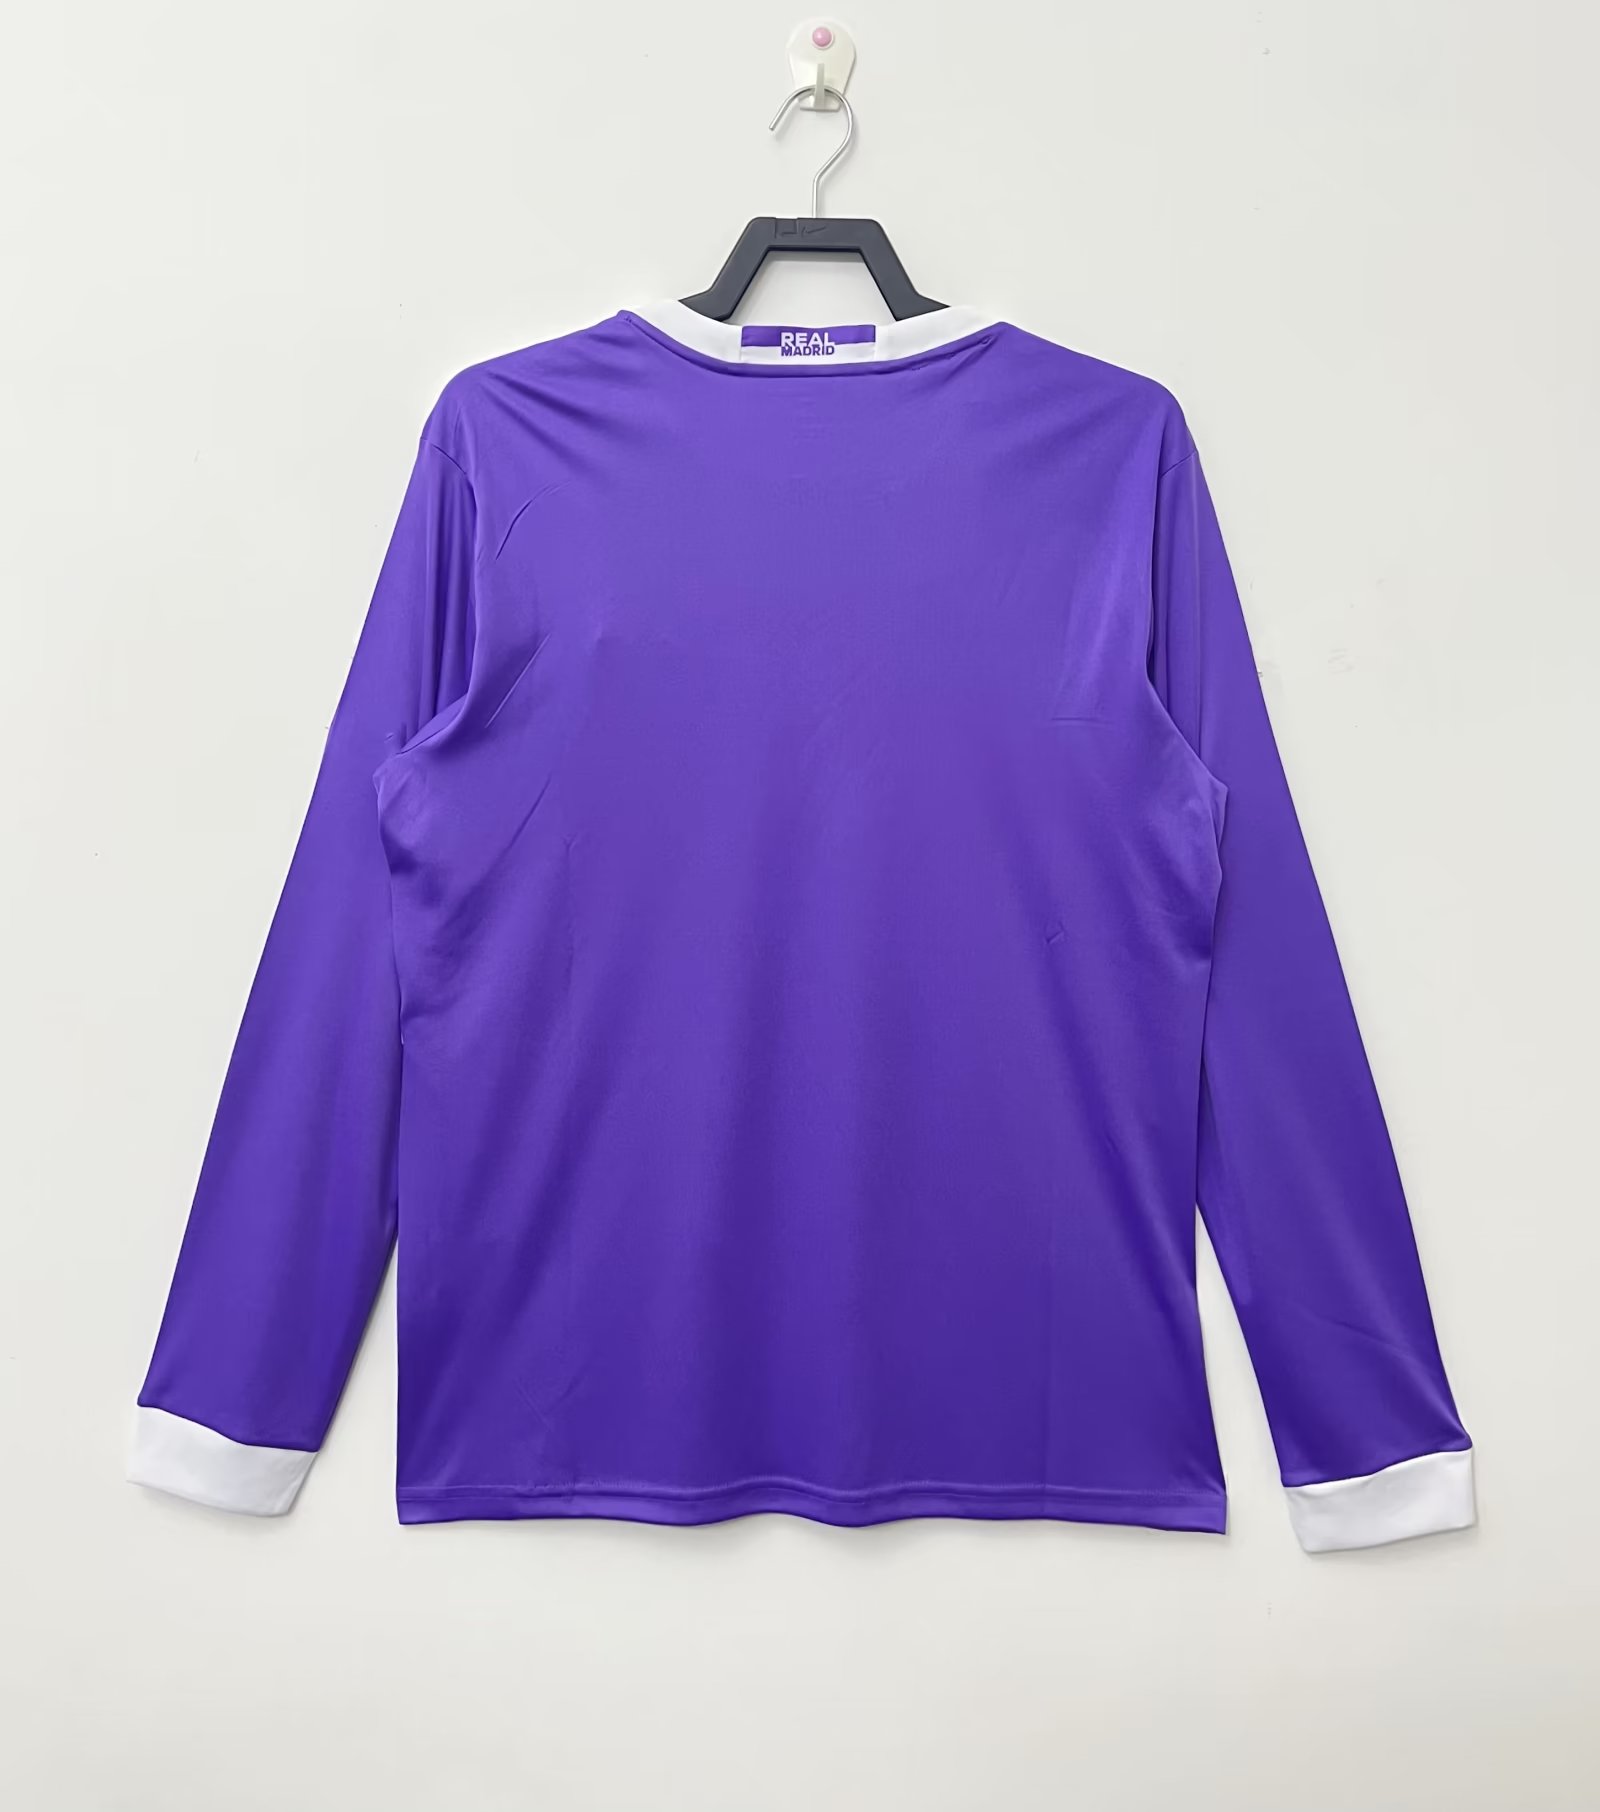 real madrid purple jersey long sleeve